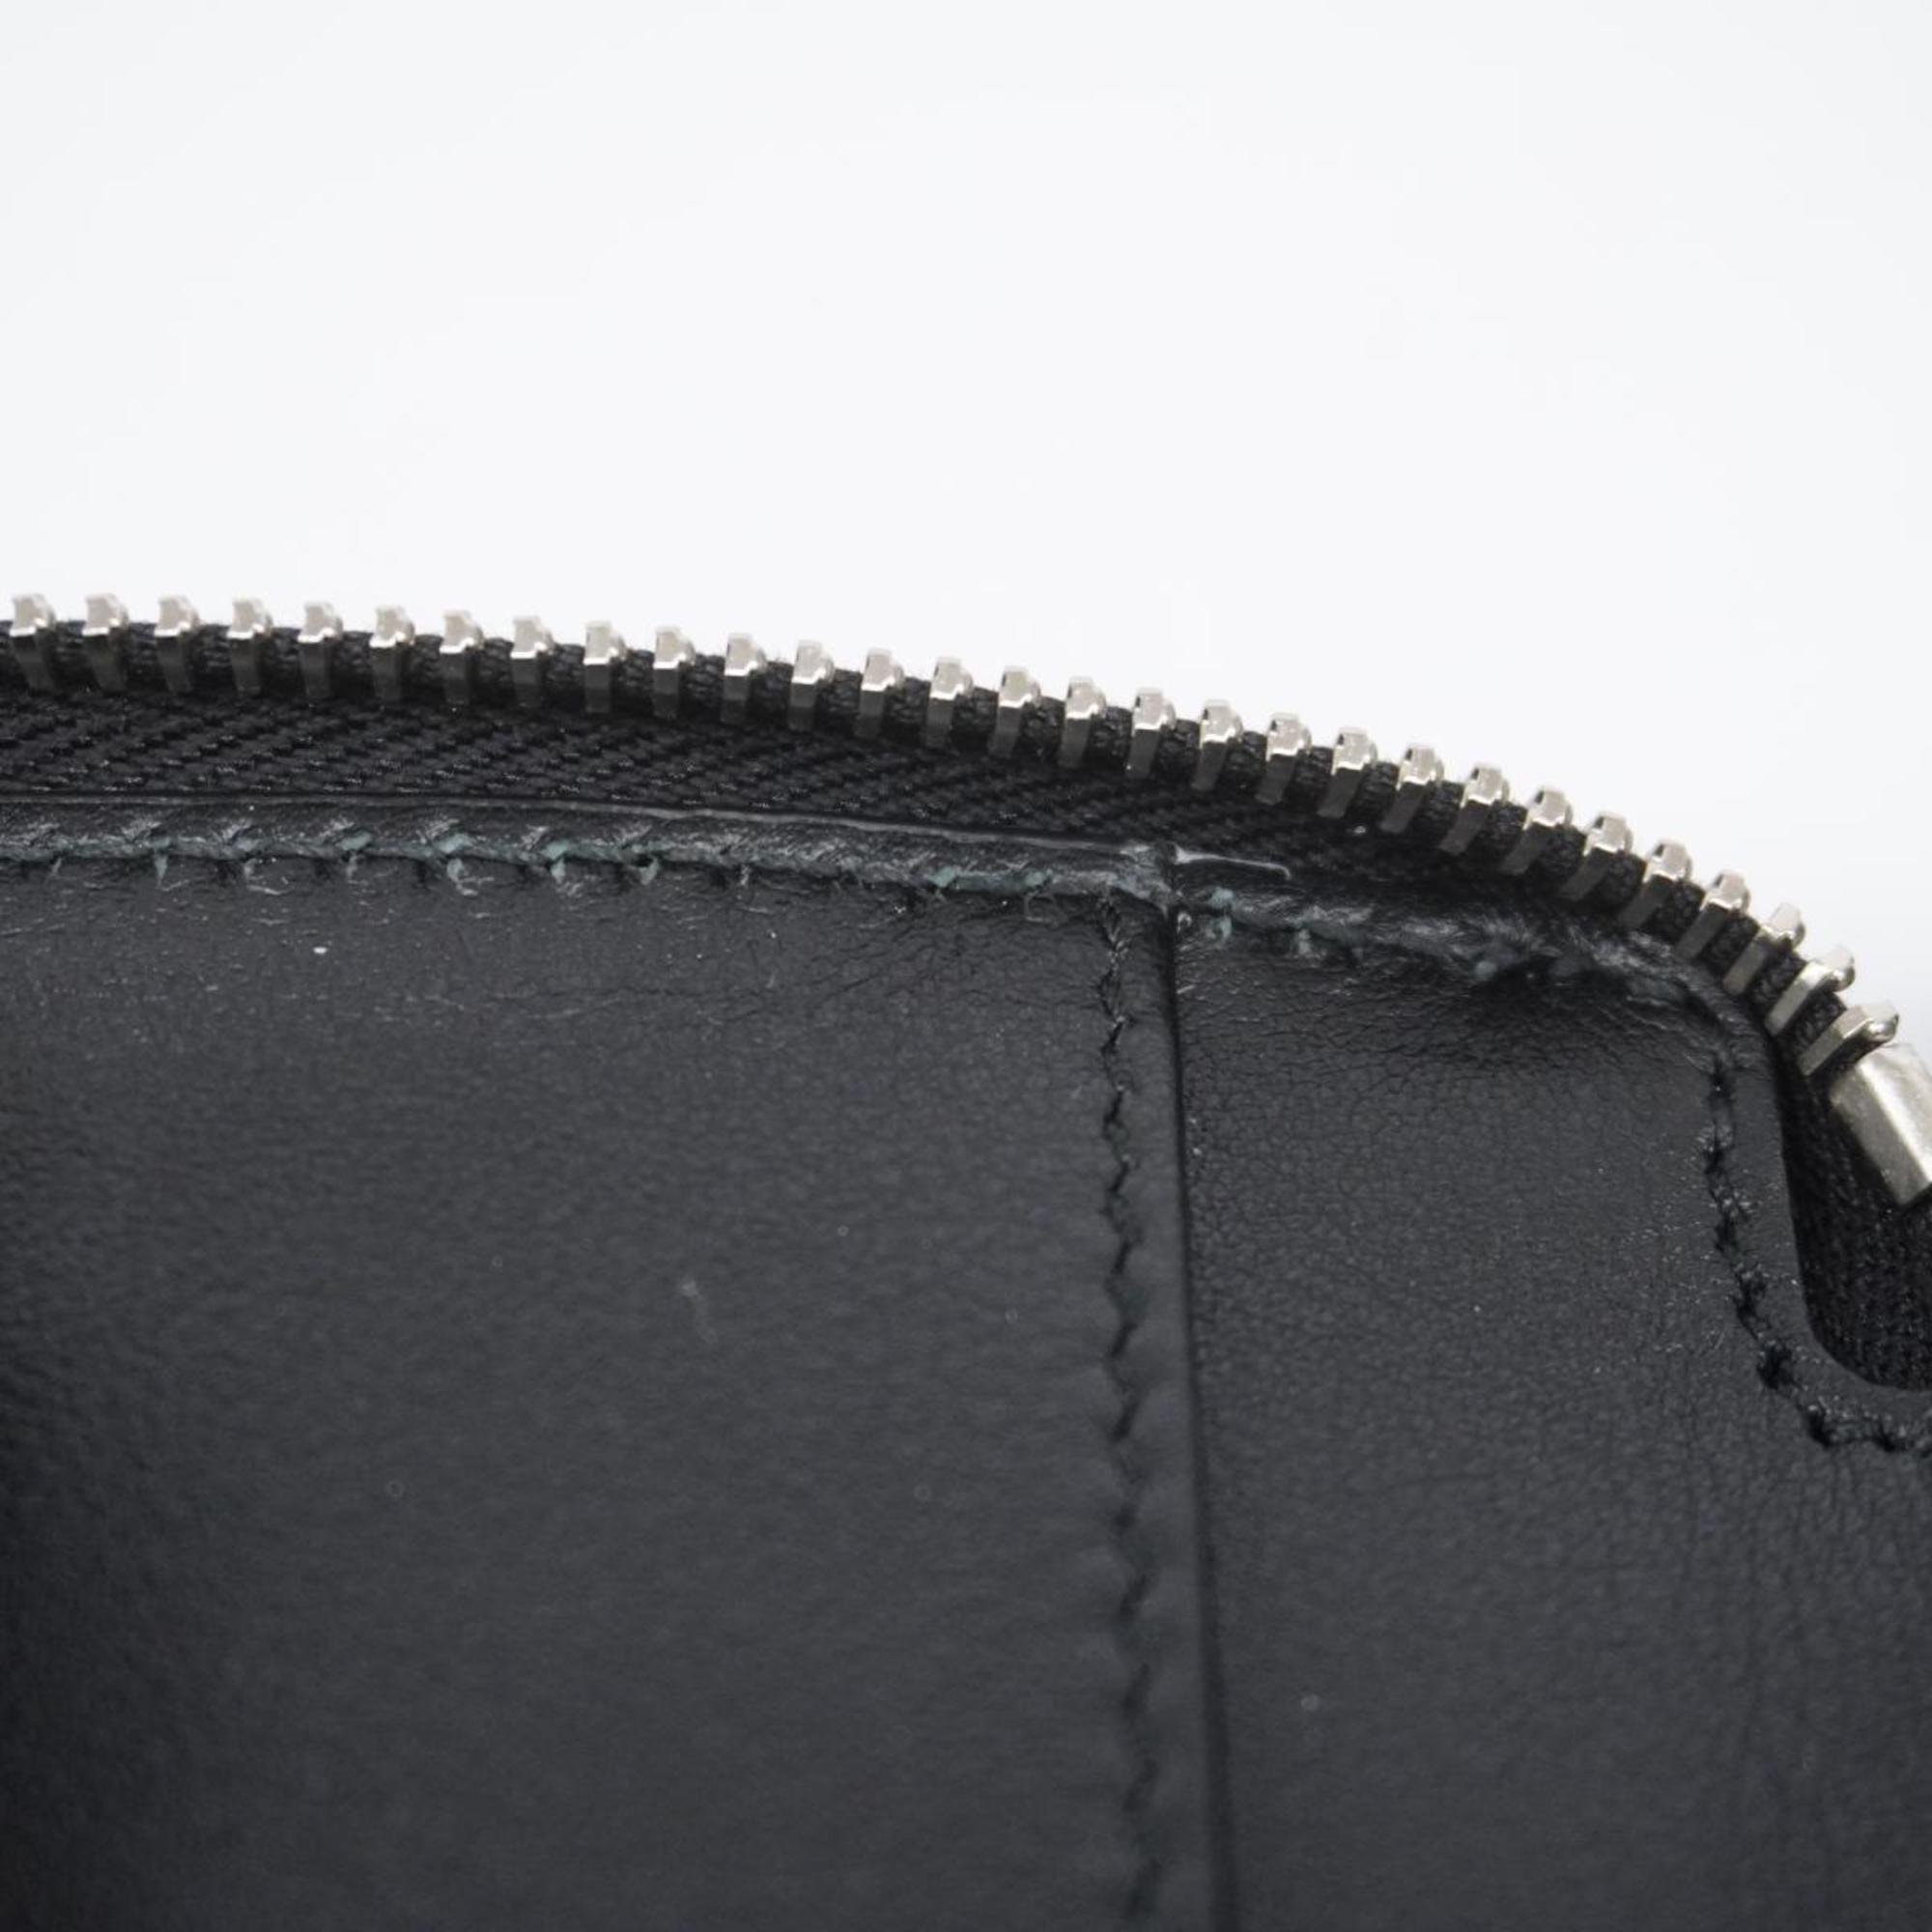 Gucci Long Wallet Micro Guccissima 449246 Leather Black Men's